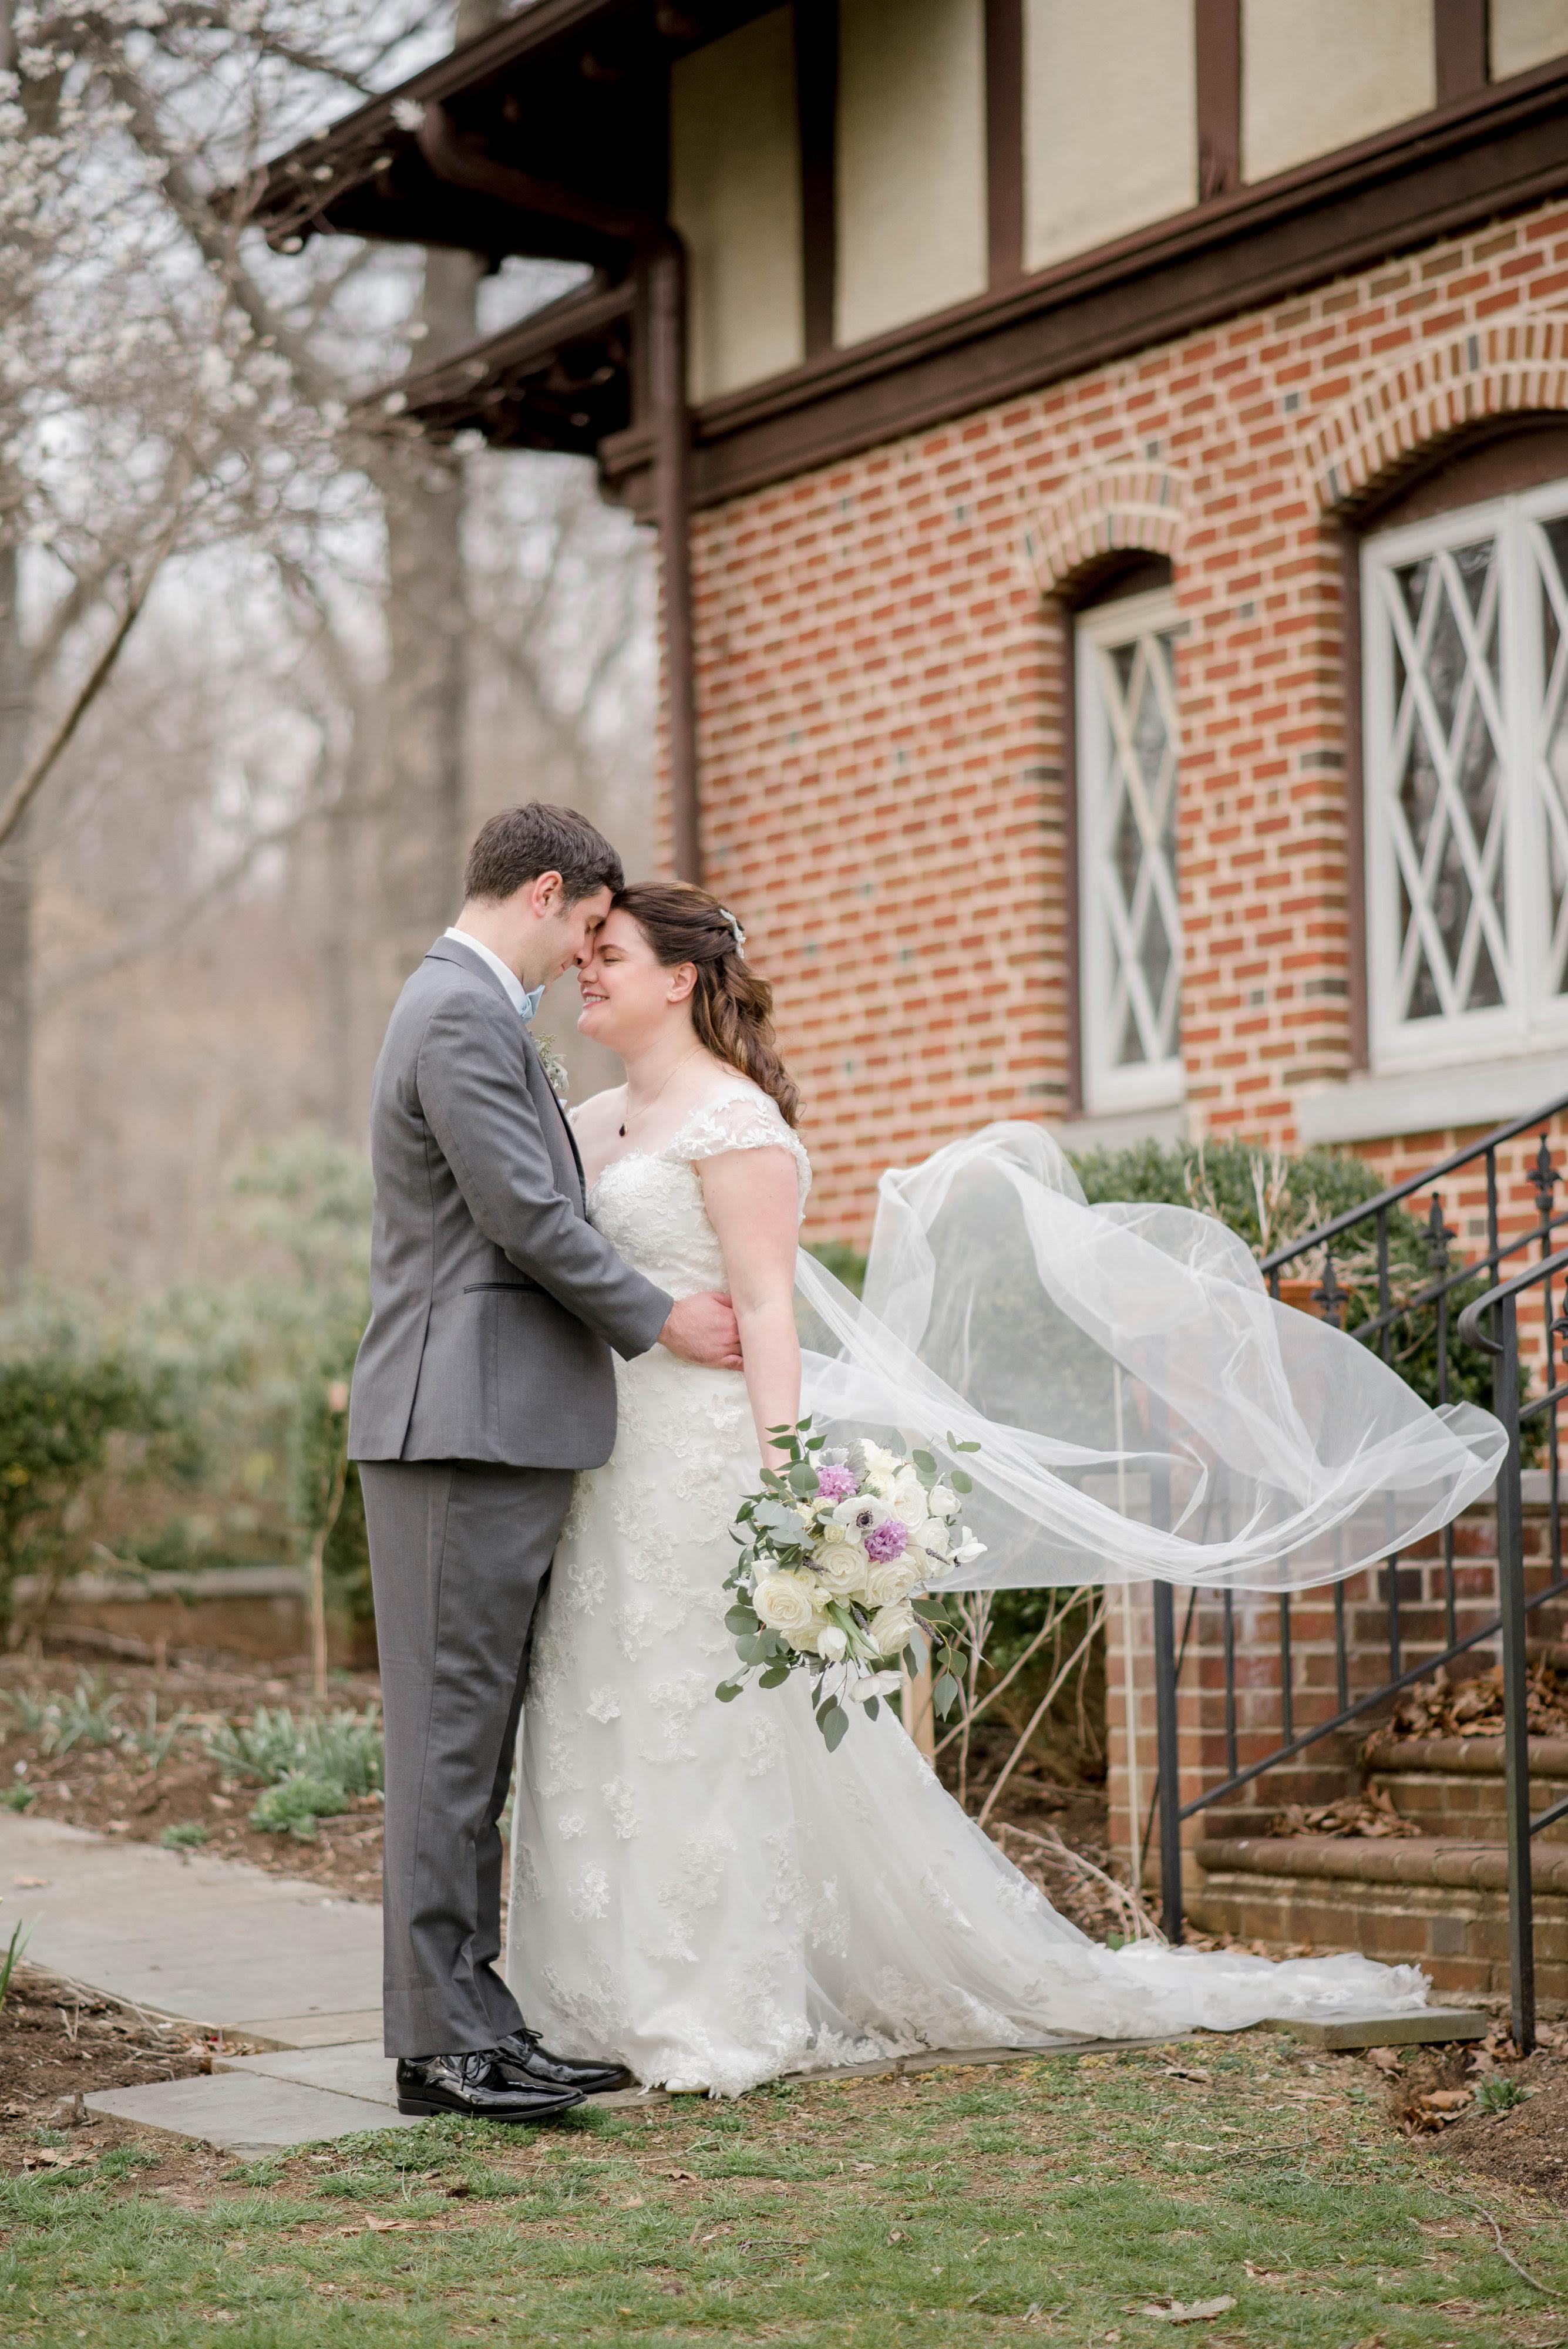 Winter Blue Wedding at Gramercy Mansion! | Maryland Venue